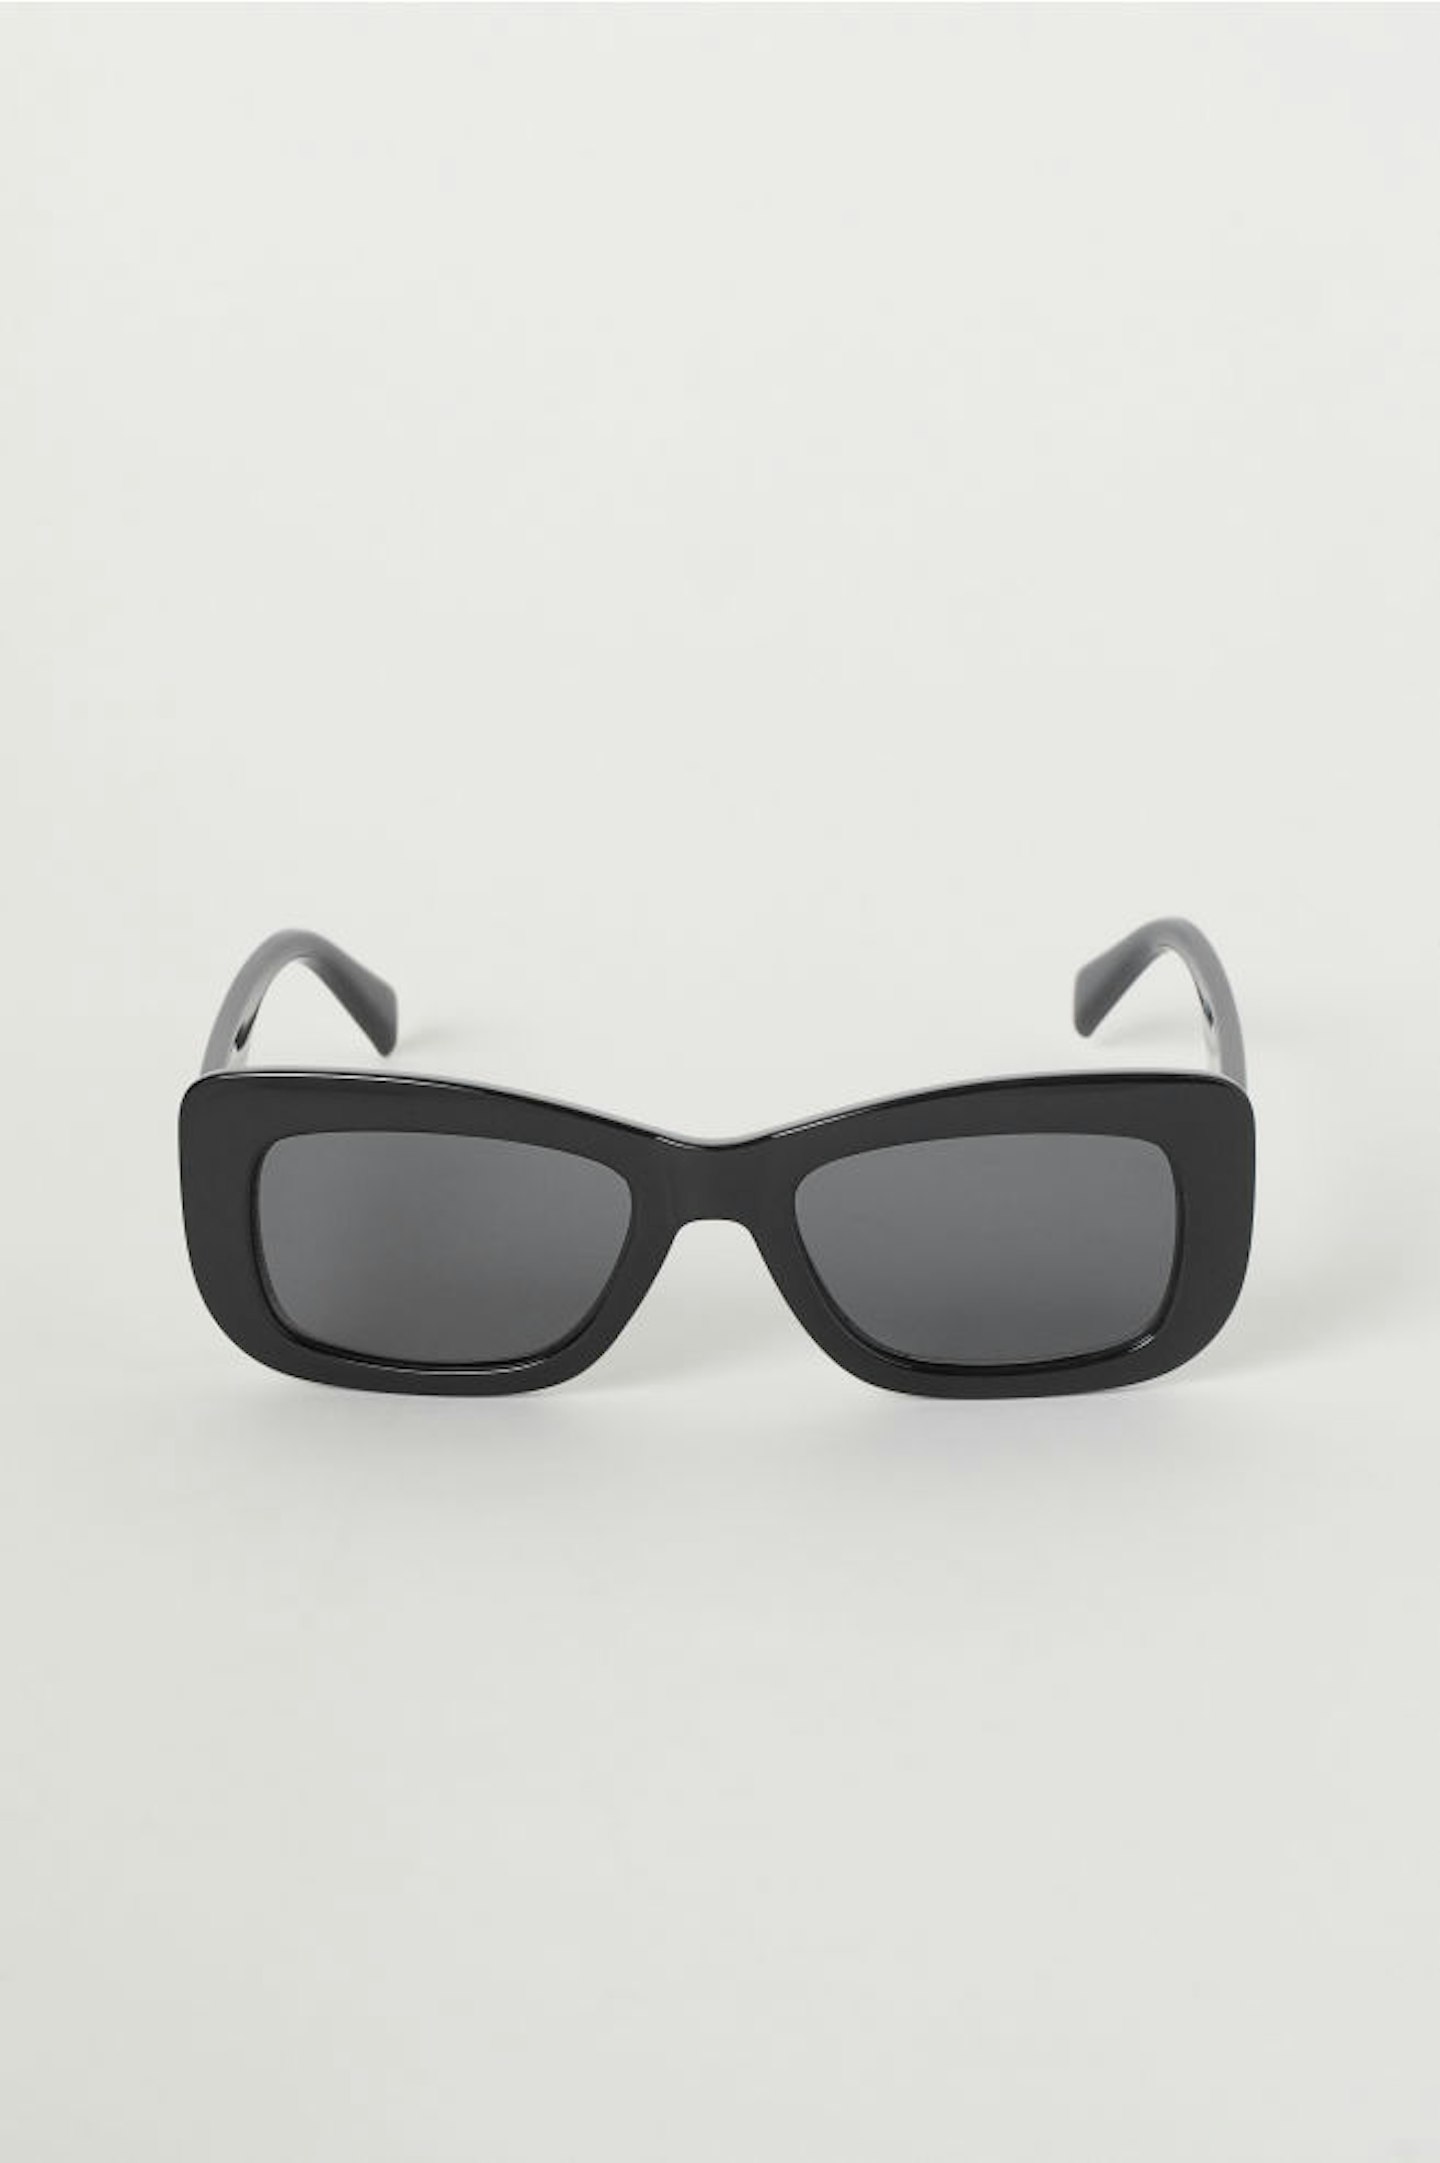 H&M, Sunglasses, £8.99